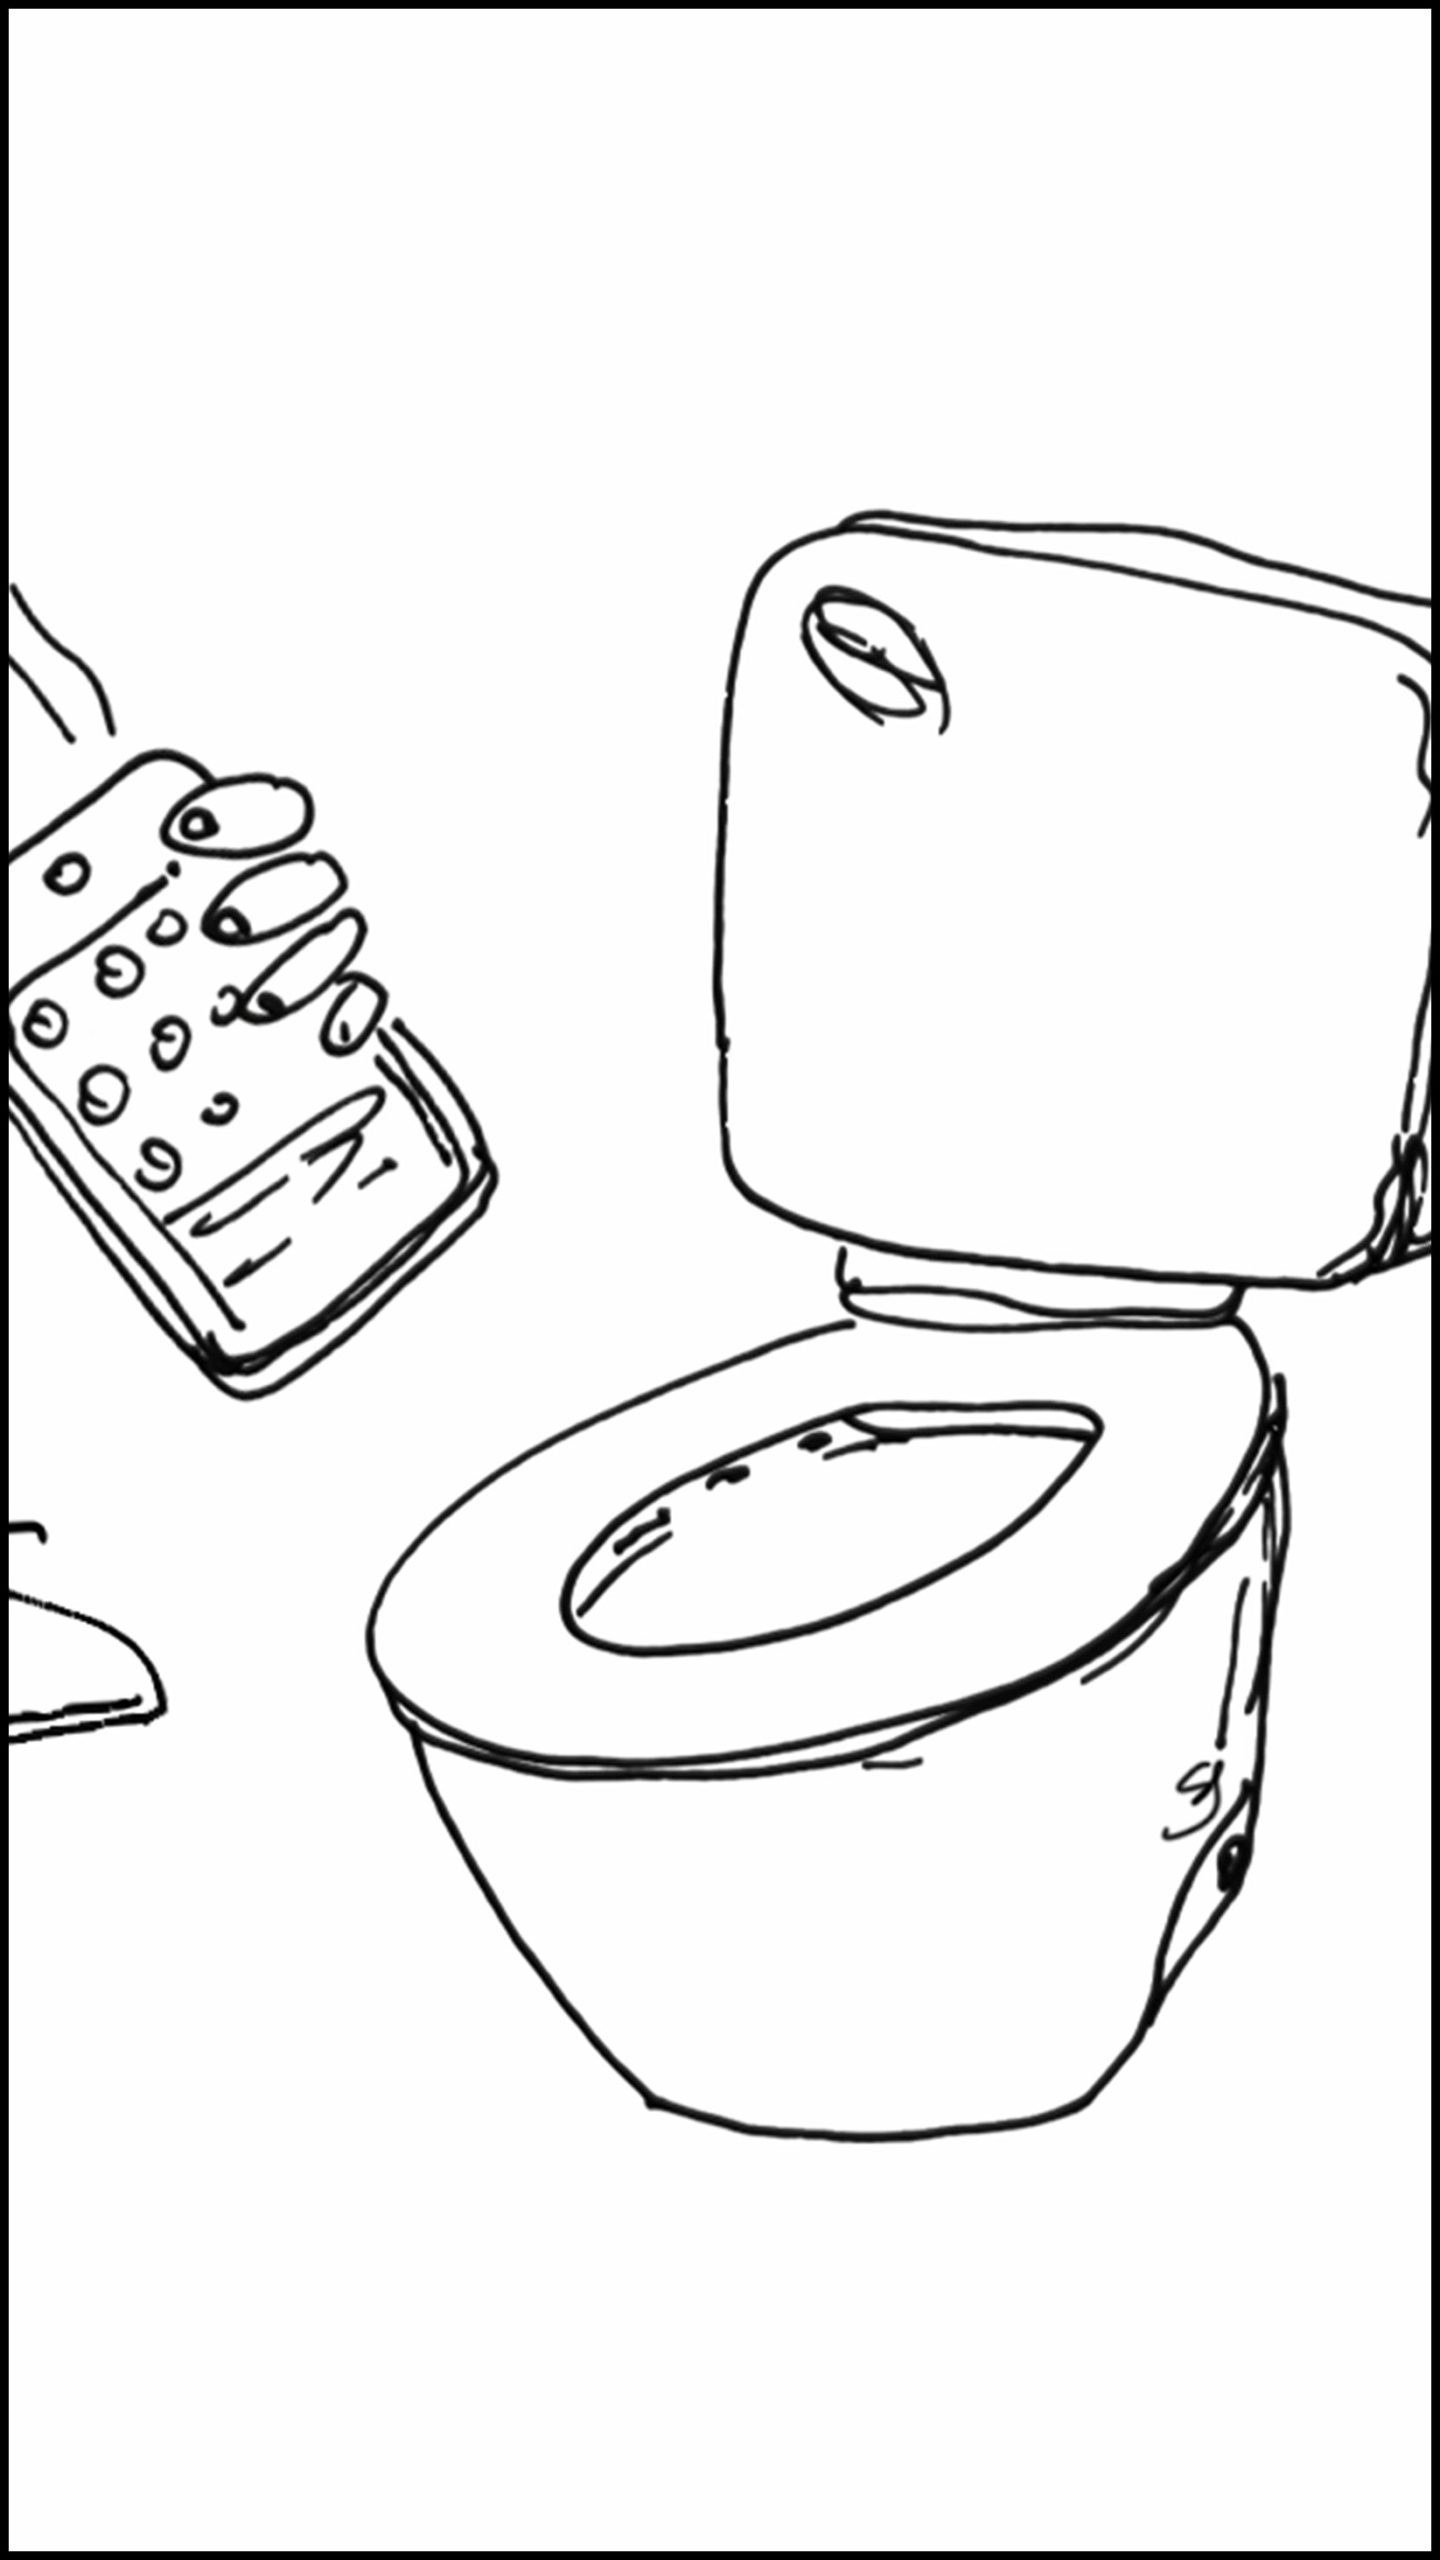 boring toilet doodle by Stella Jurgen